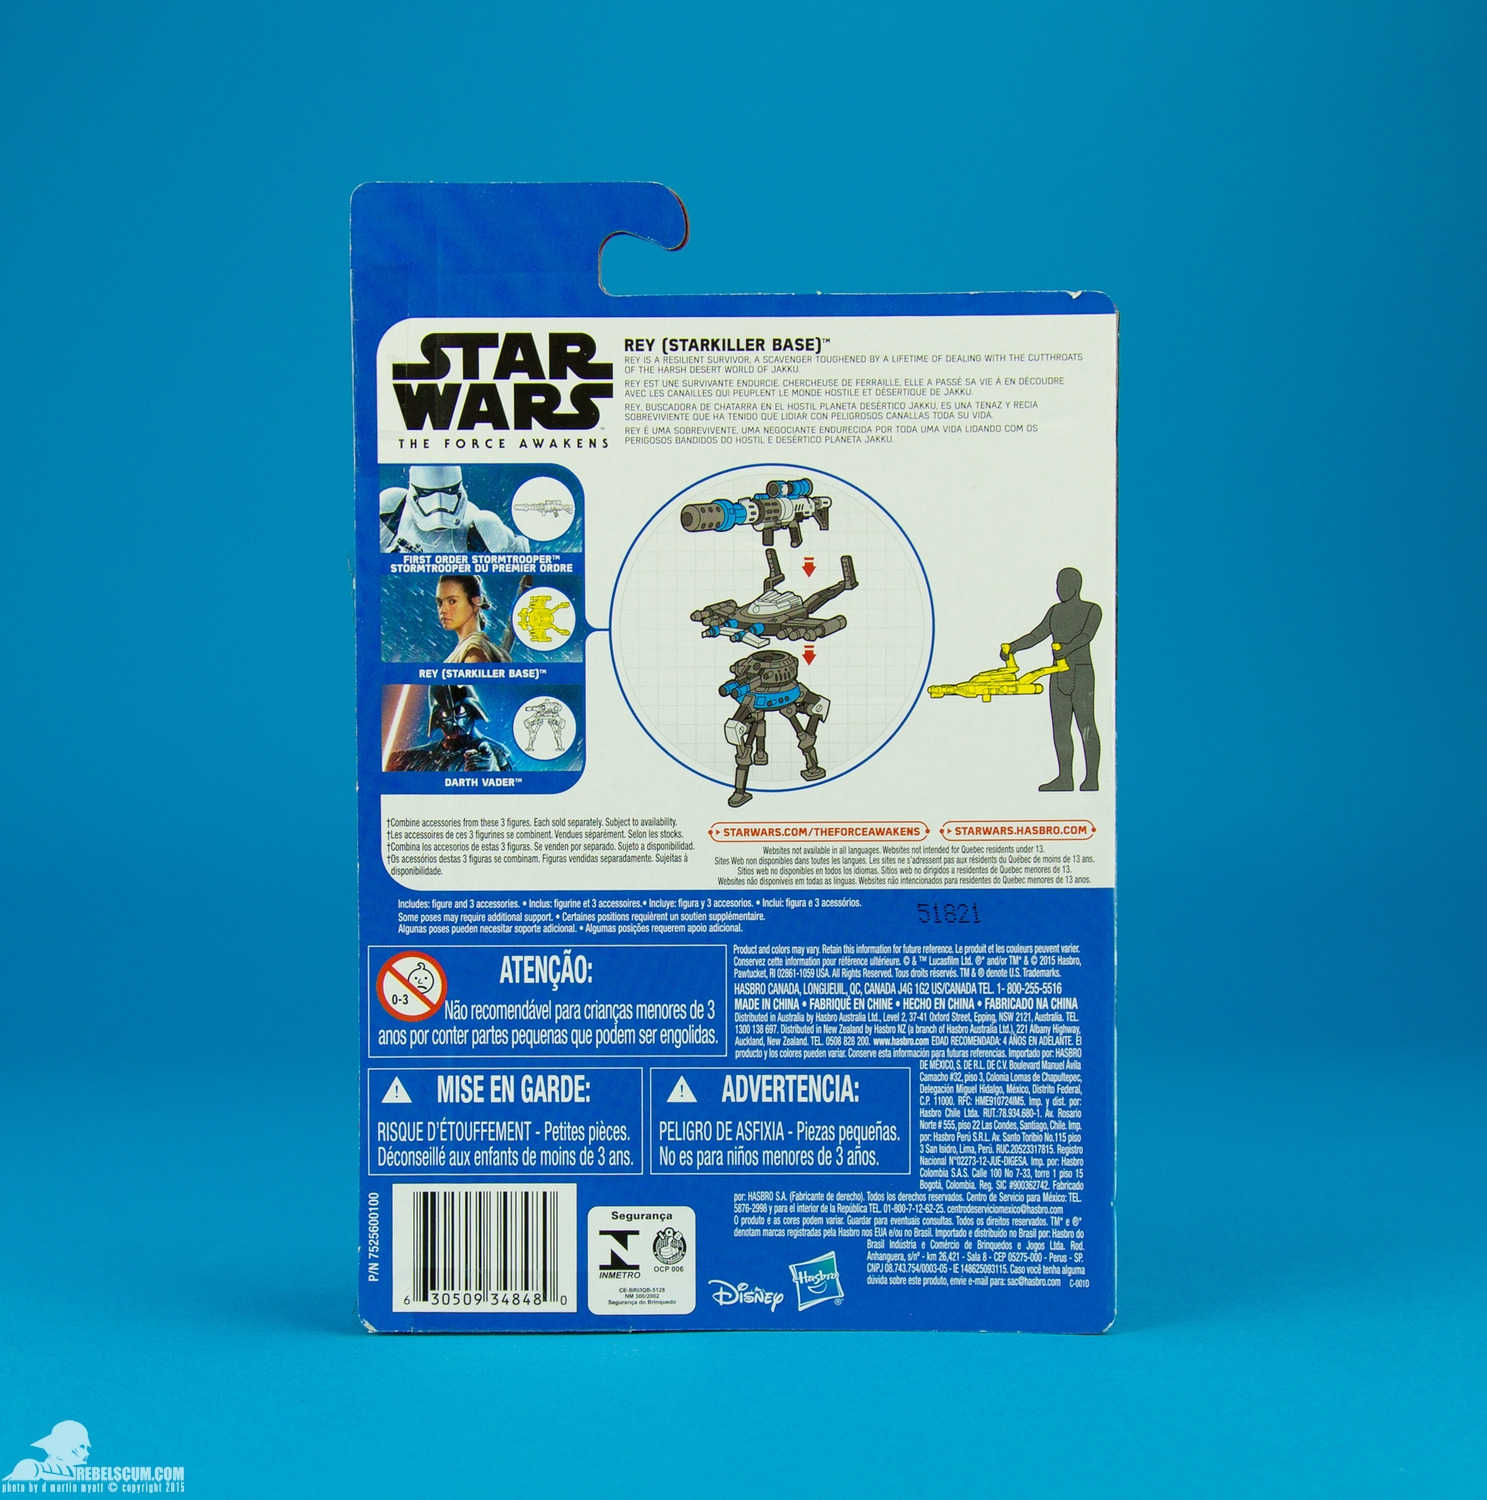 Rey-Starkiller-Base-Star-Wars-The-Force-Awakens-Hasbro-017.jpg